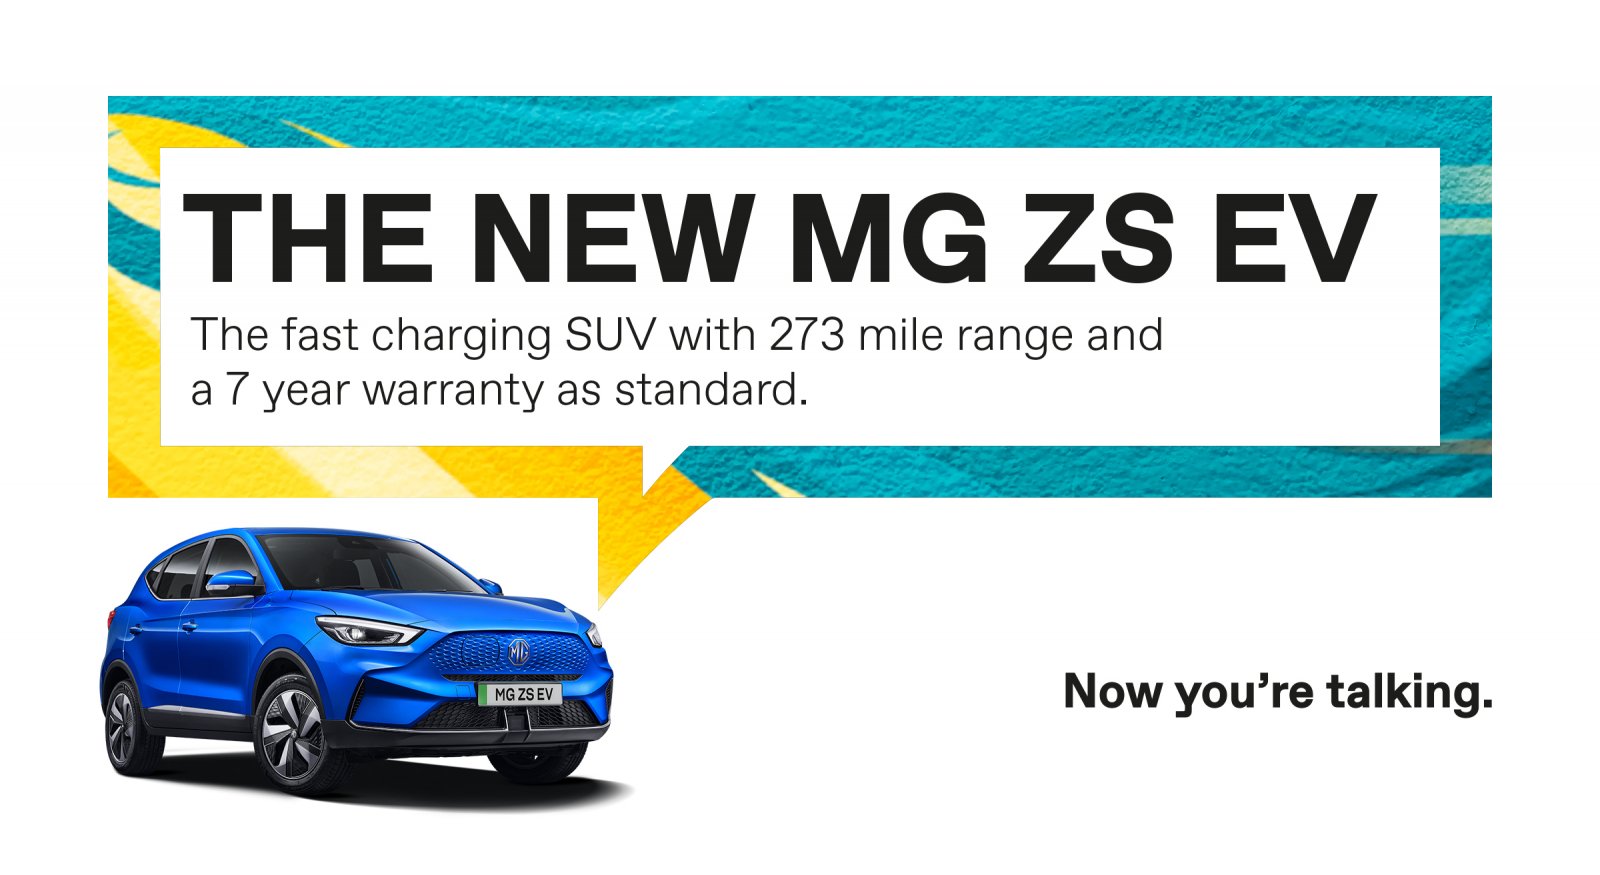 New MG ZS EV - keep me informed